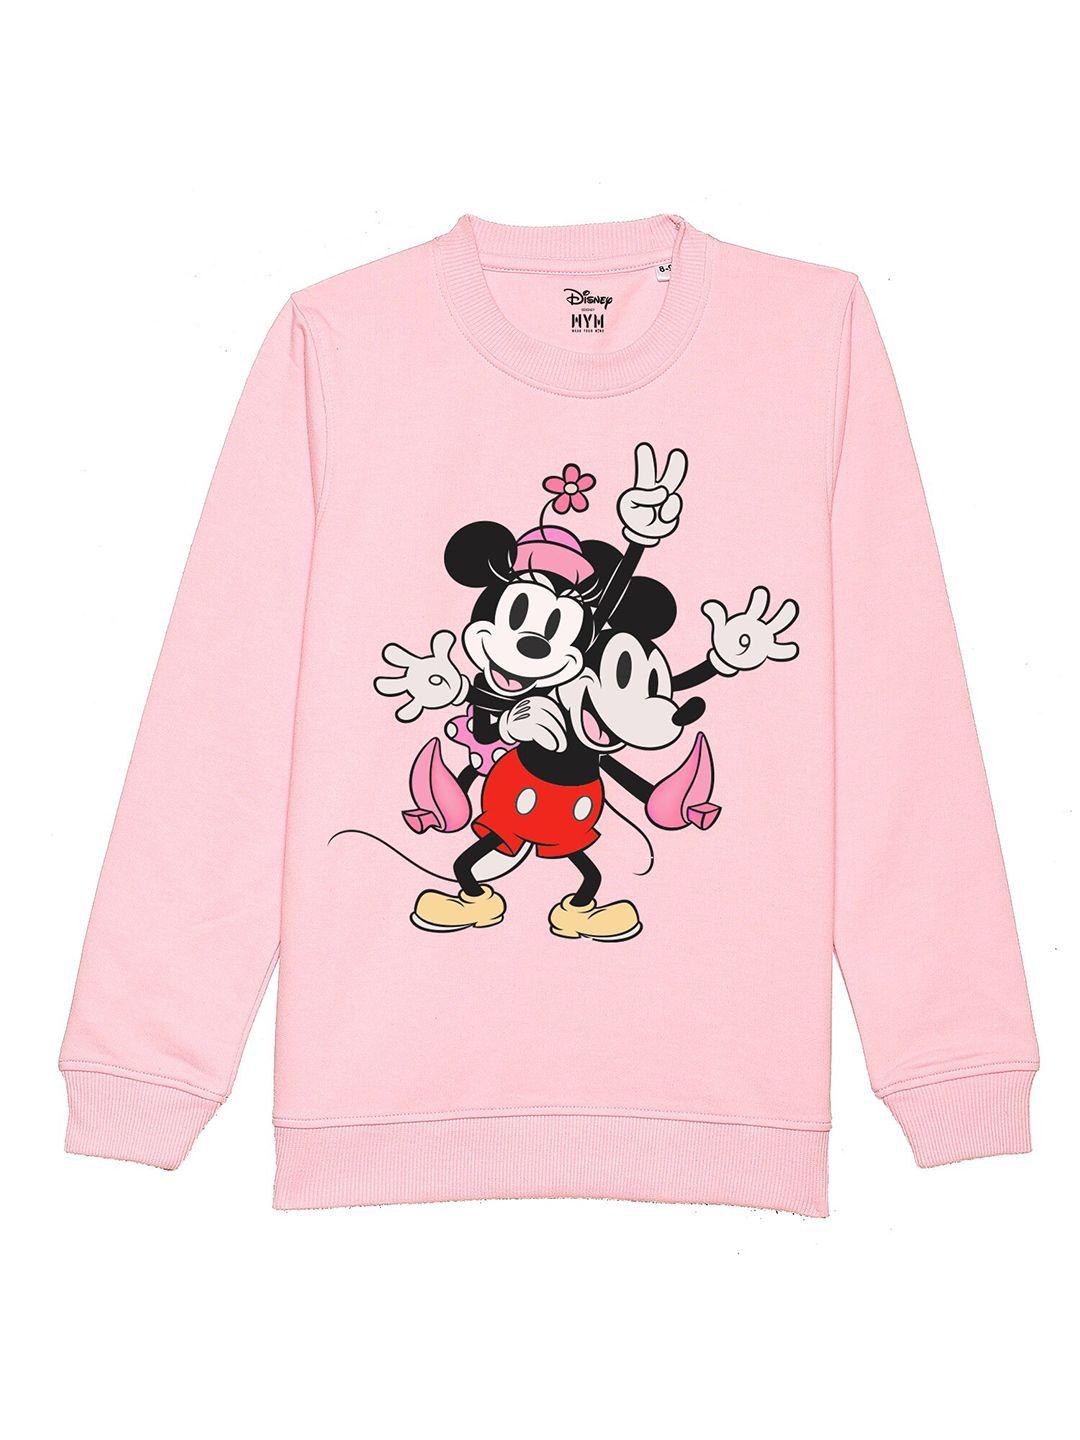 disney by wear your mind kids pink printed sweatshirt